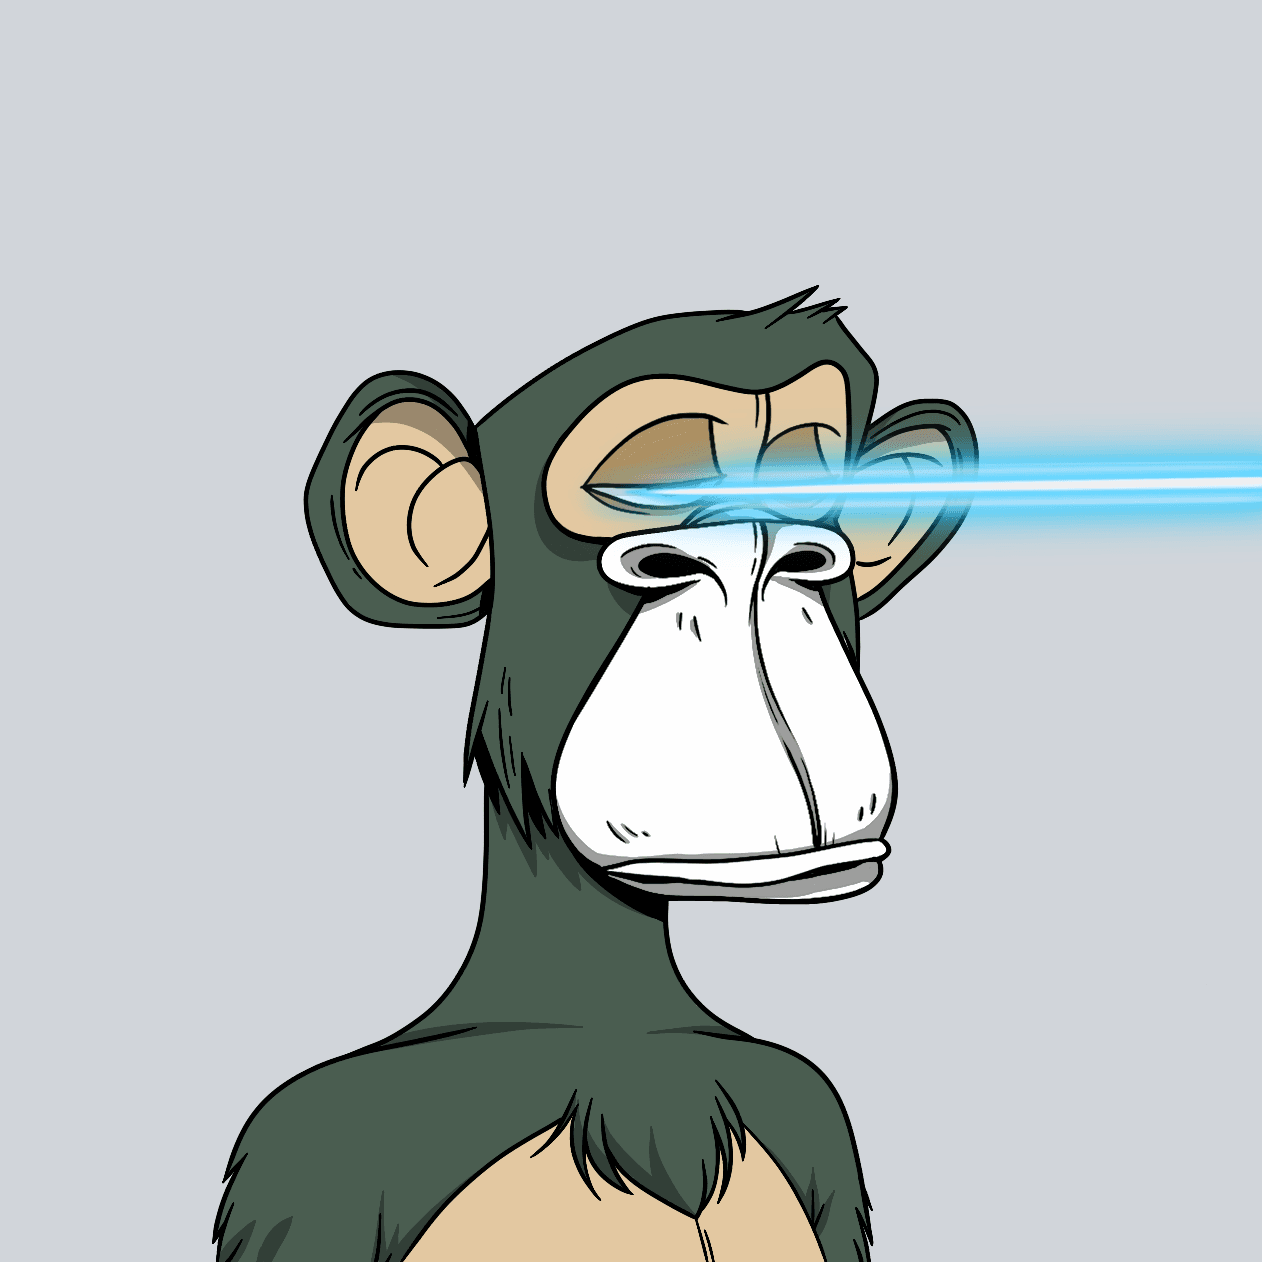 Green Ape II - Lasers